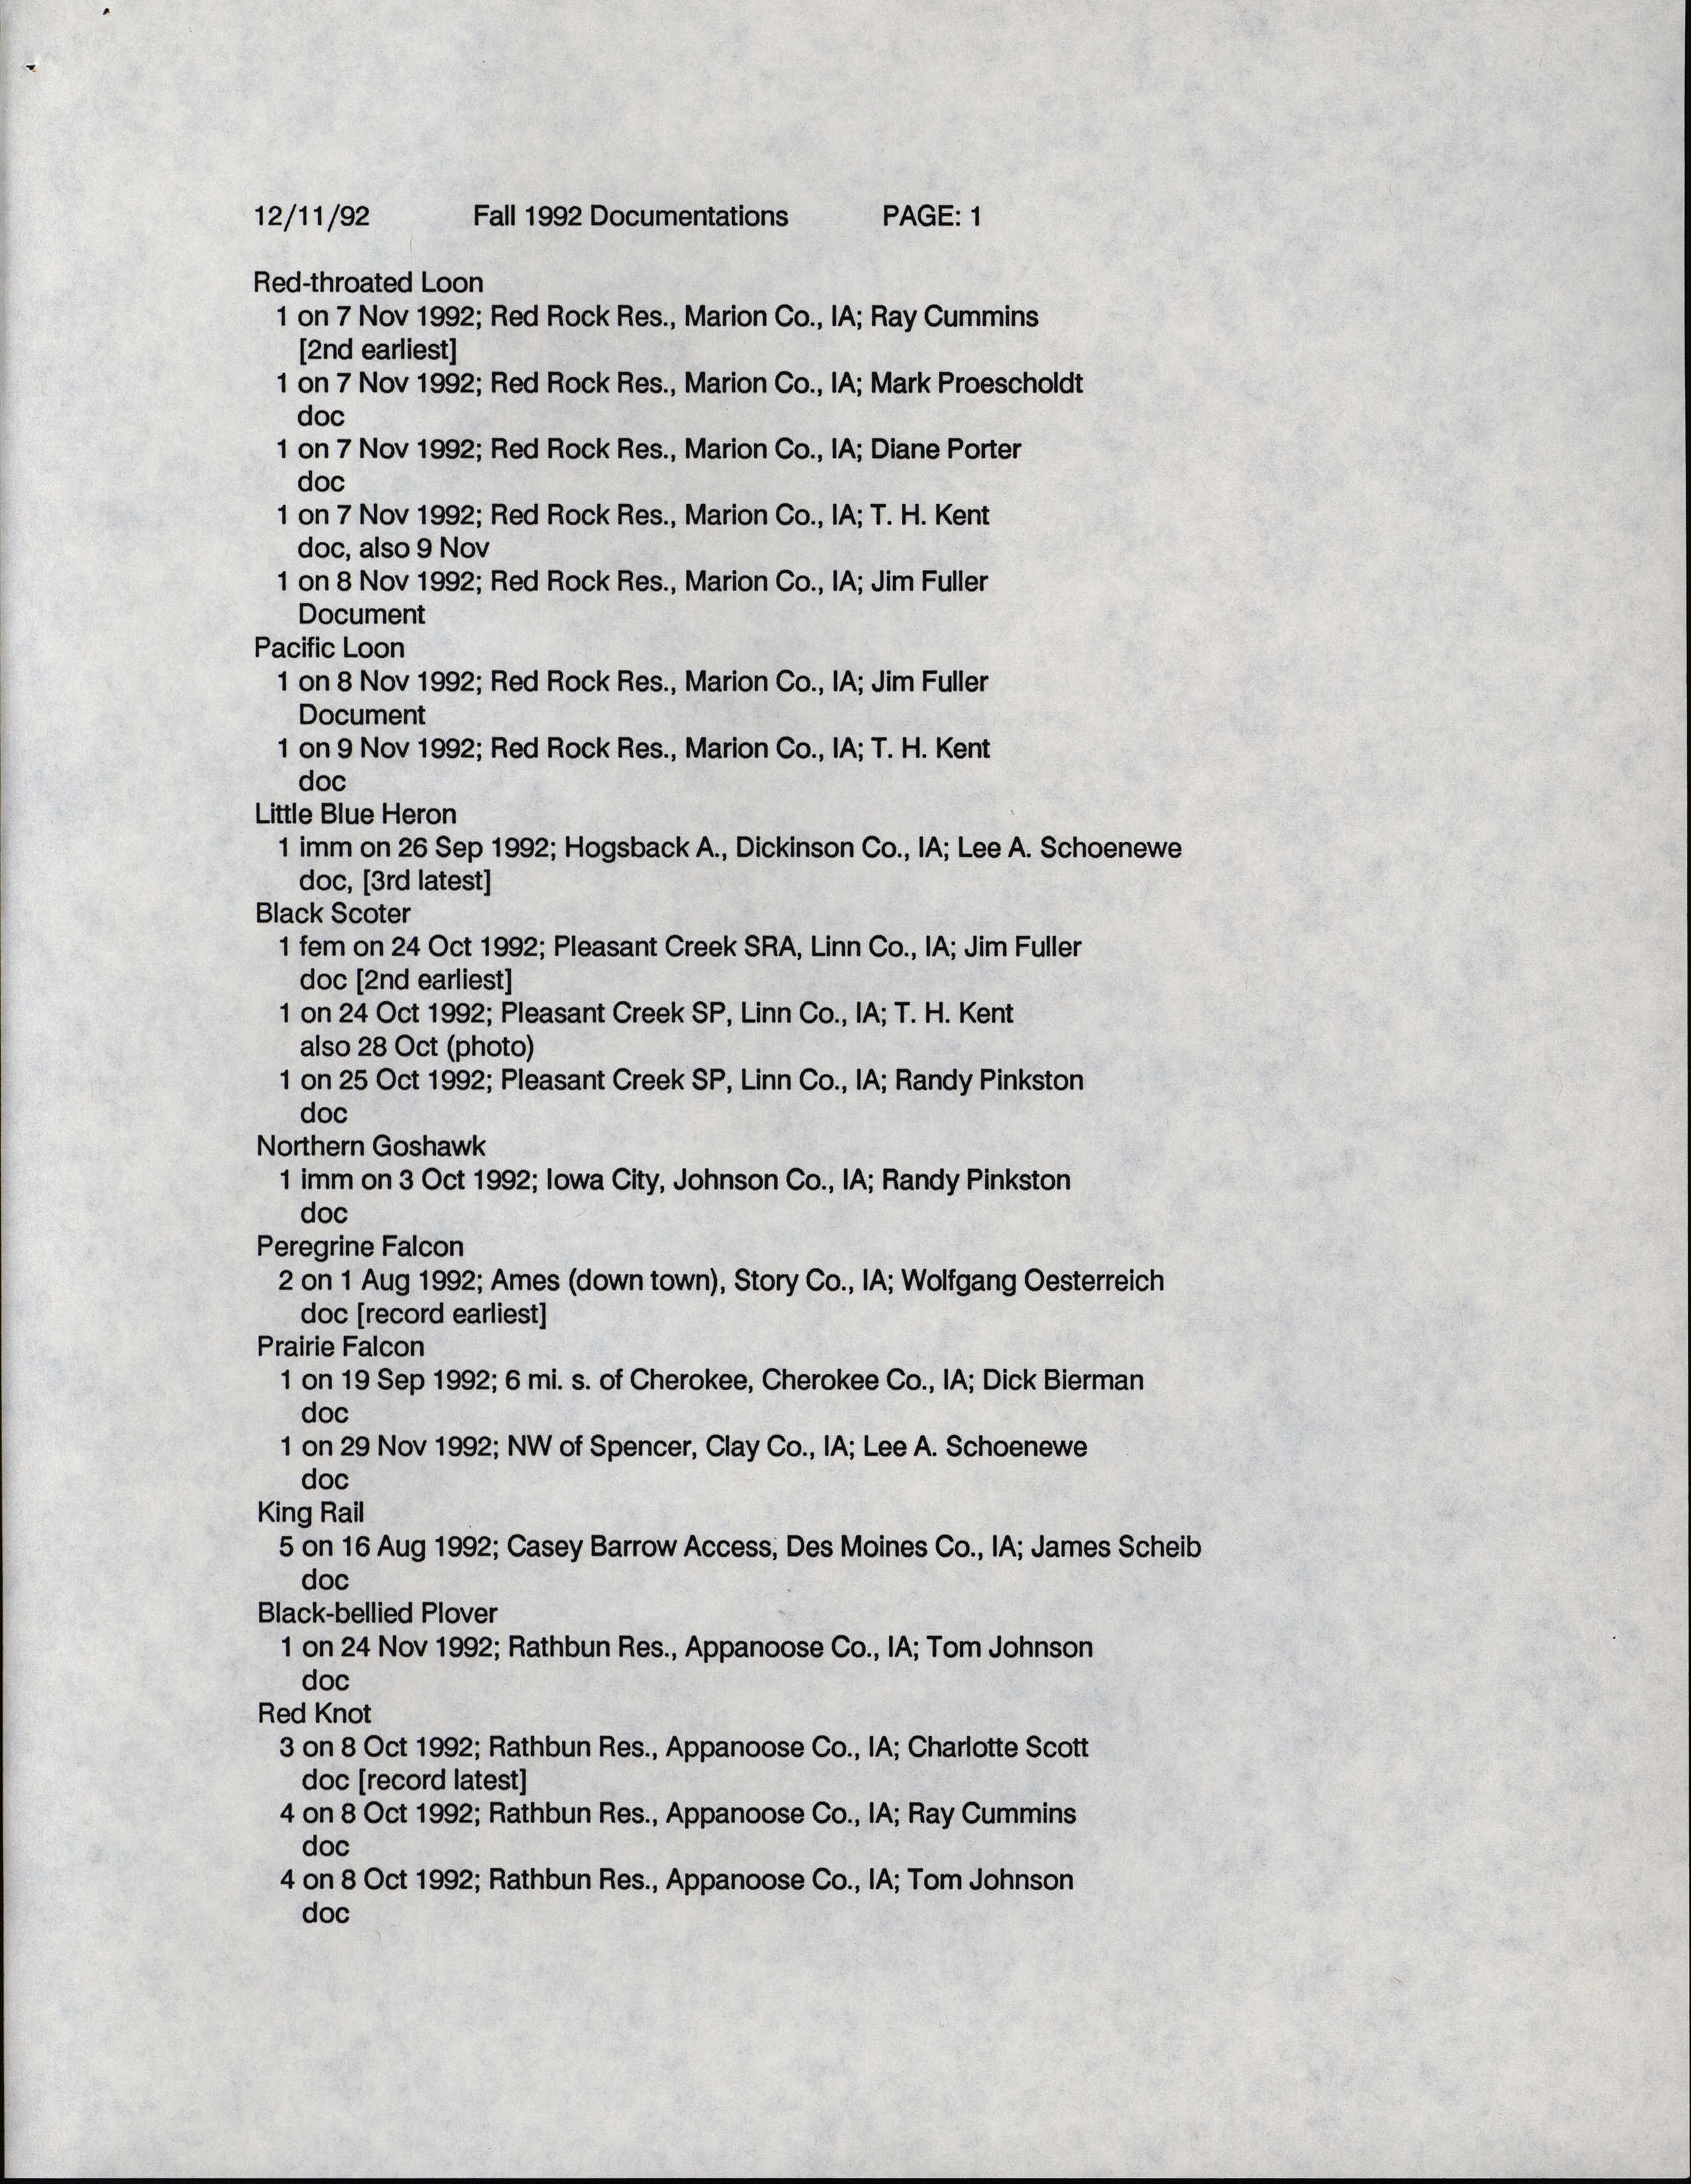 Fall 1992 documentations, December 11, 1992